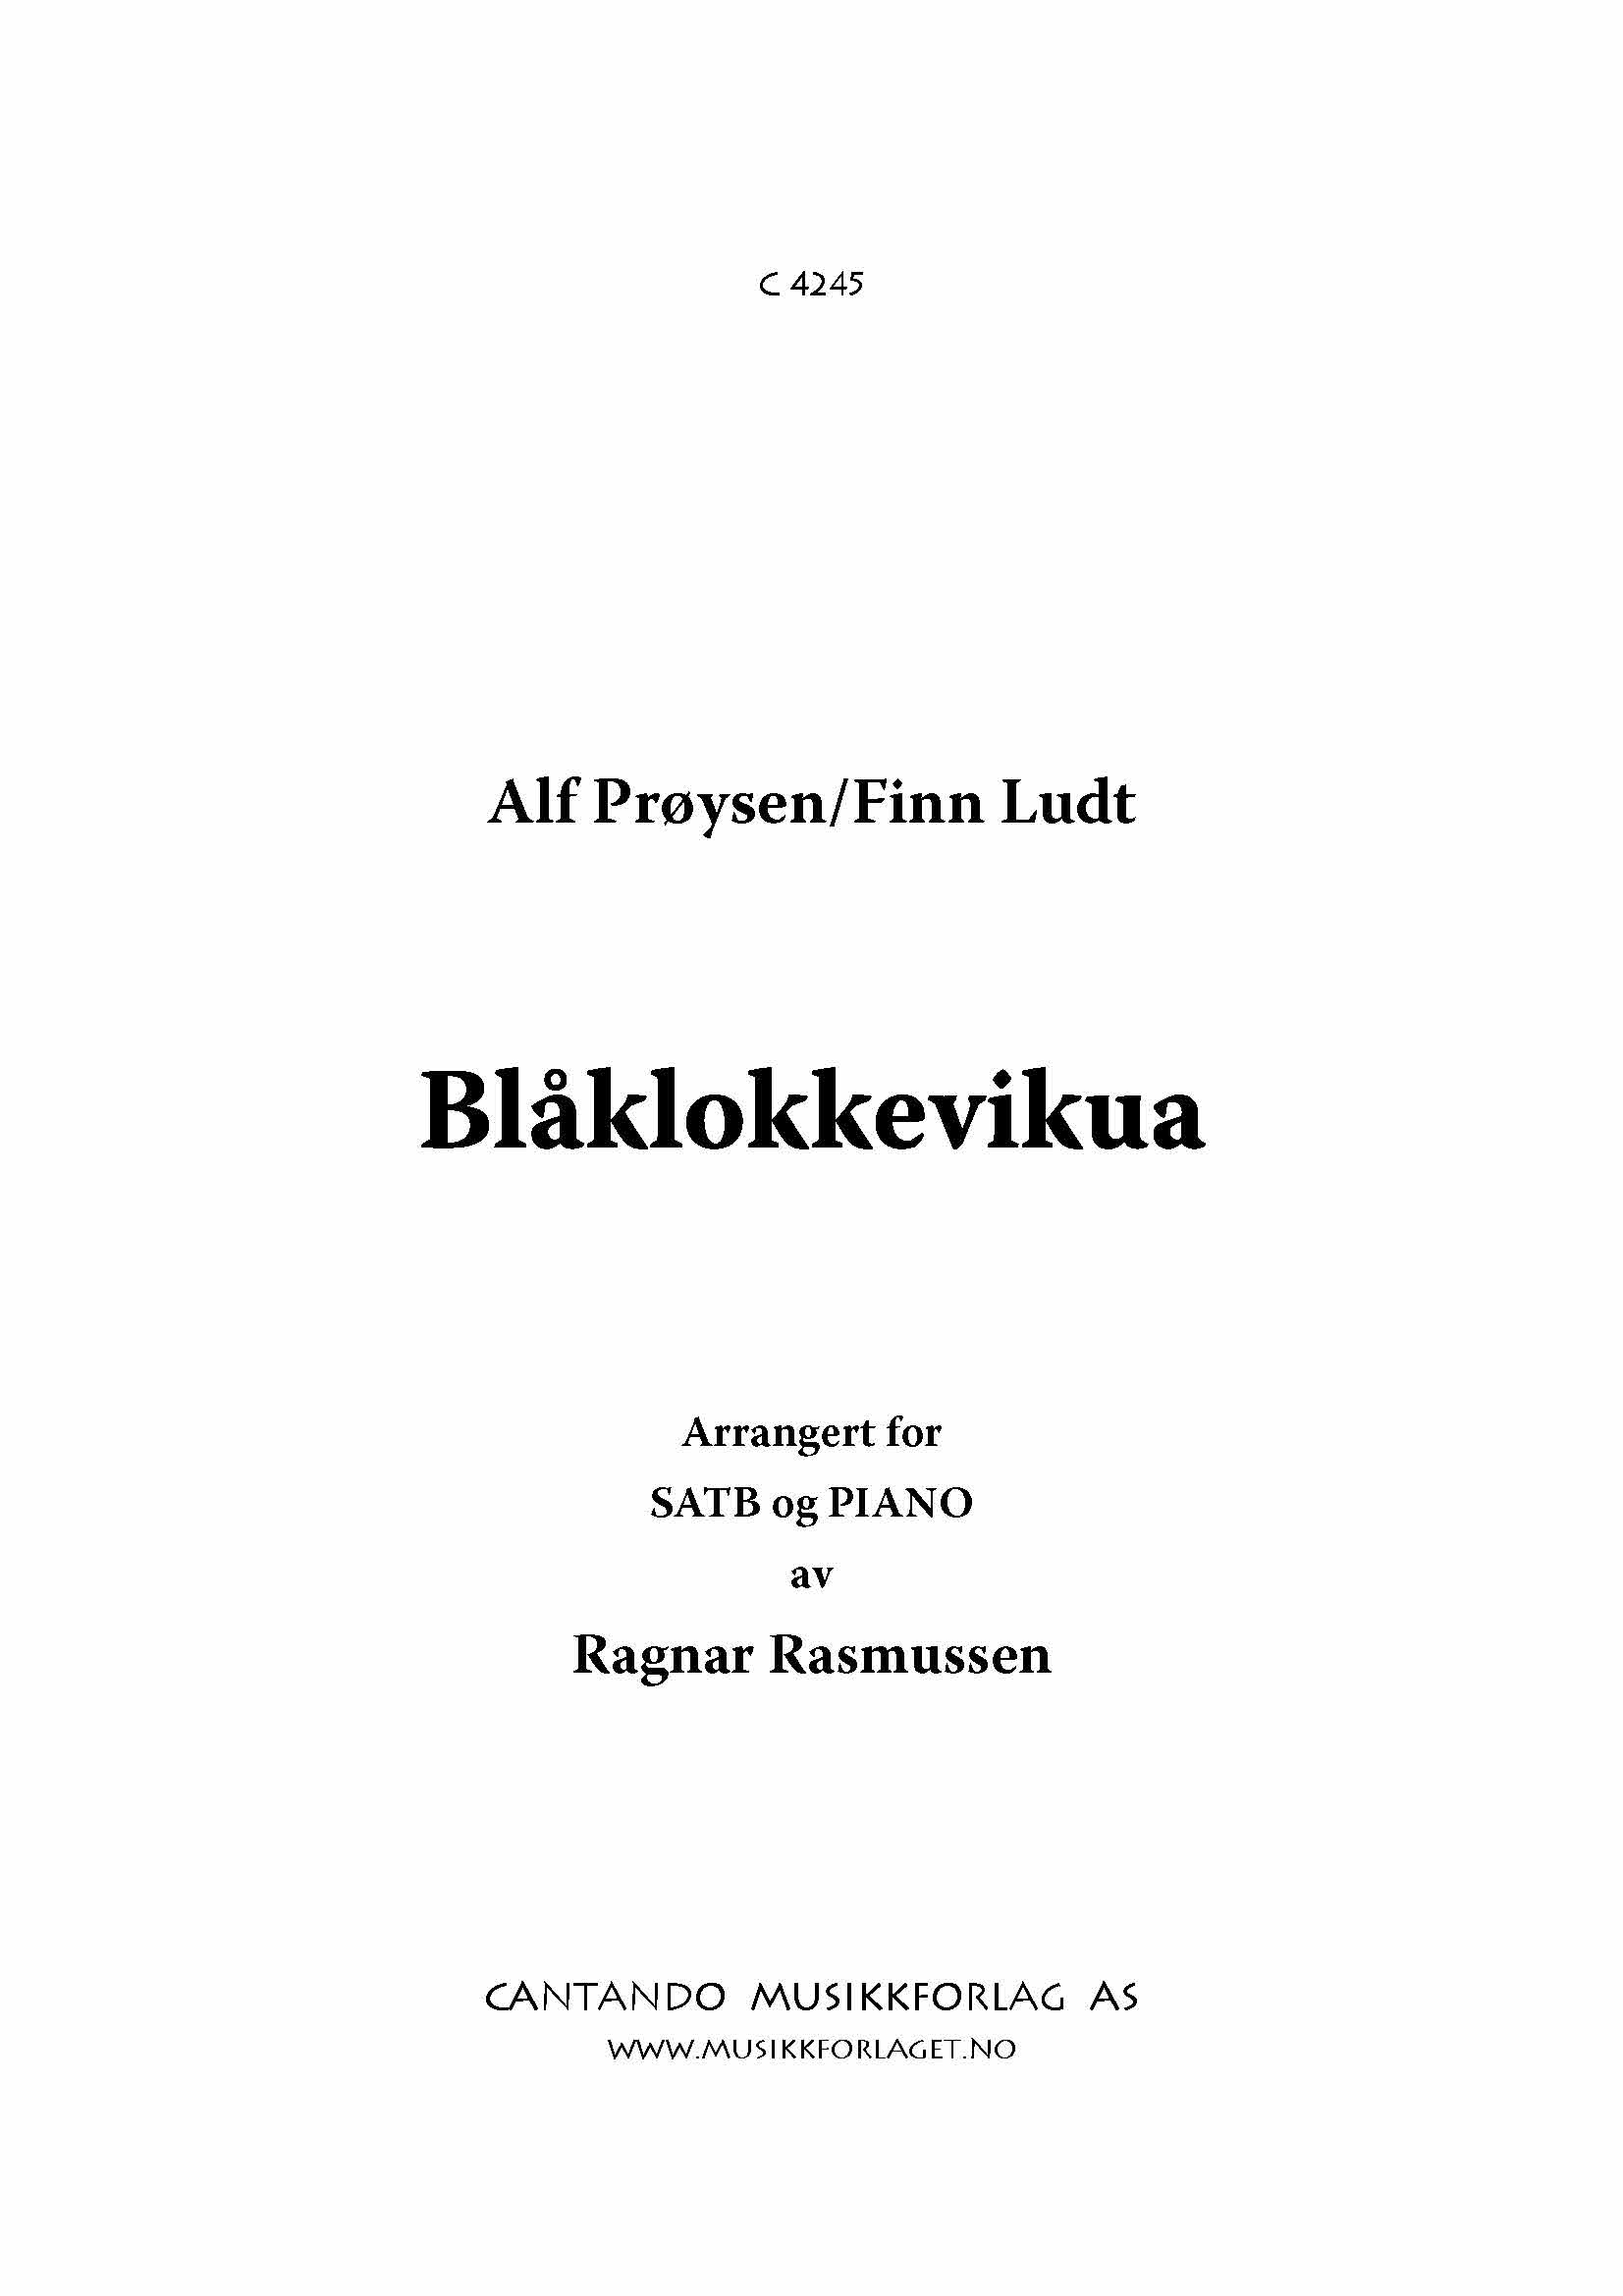 Blåklokkevikua (Arr: Ragnar Rasmussen)